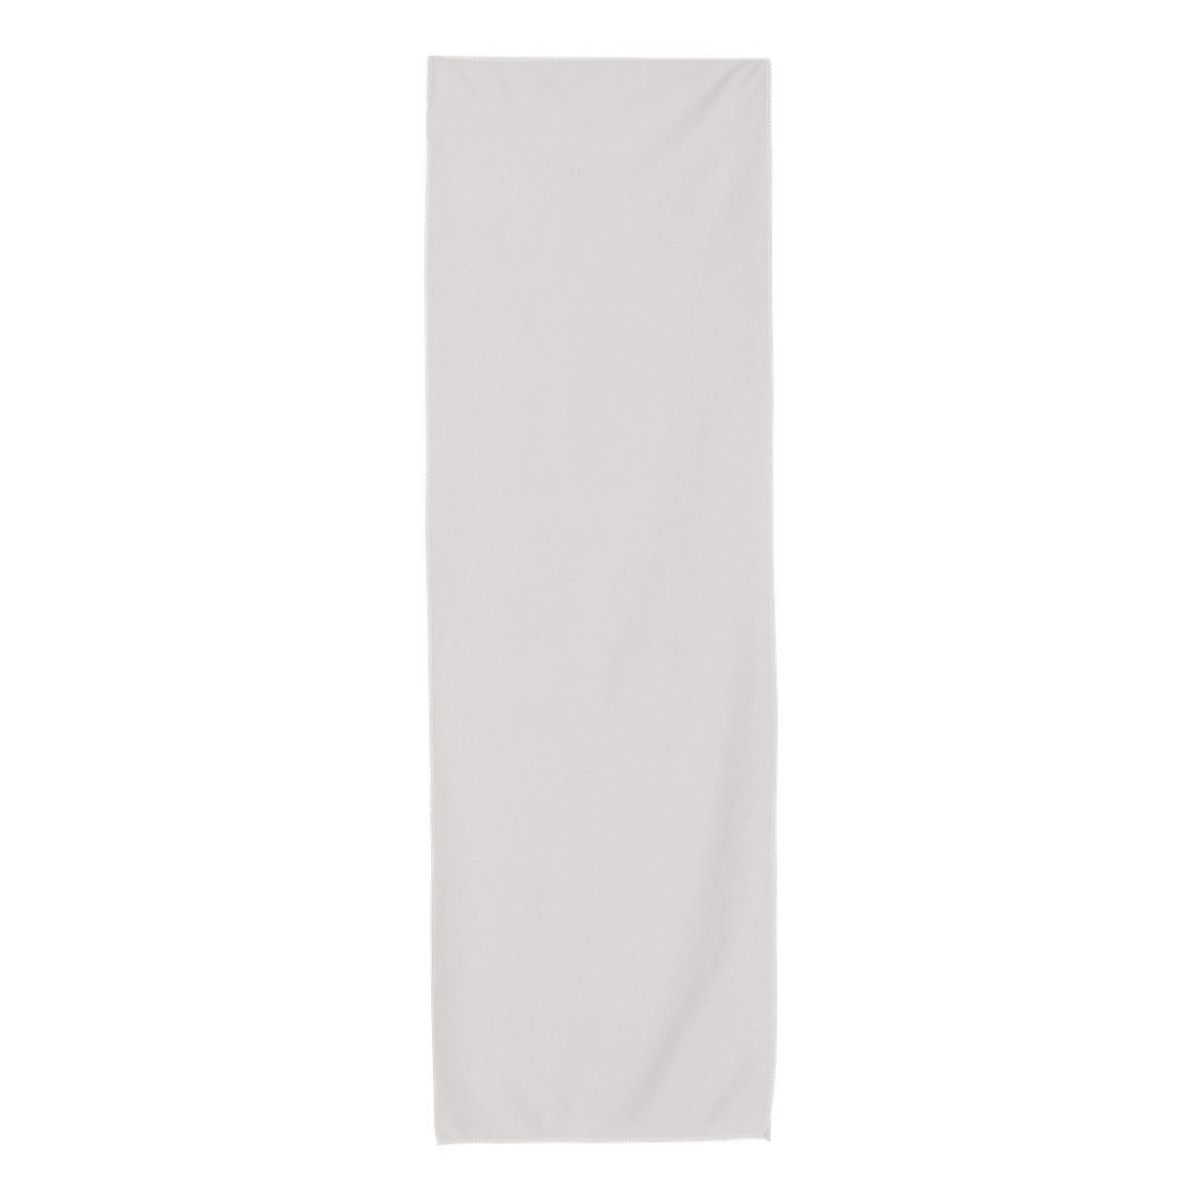 c p company british sailor beach towel Carmel Towel Company Холодное полотенце, серый